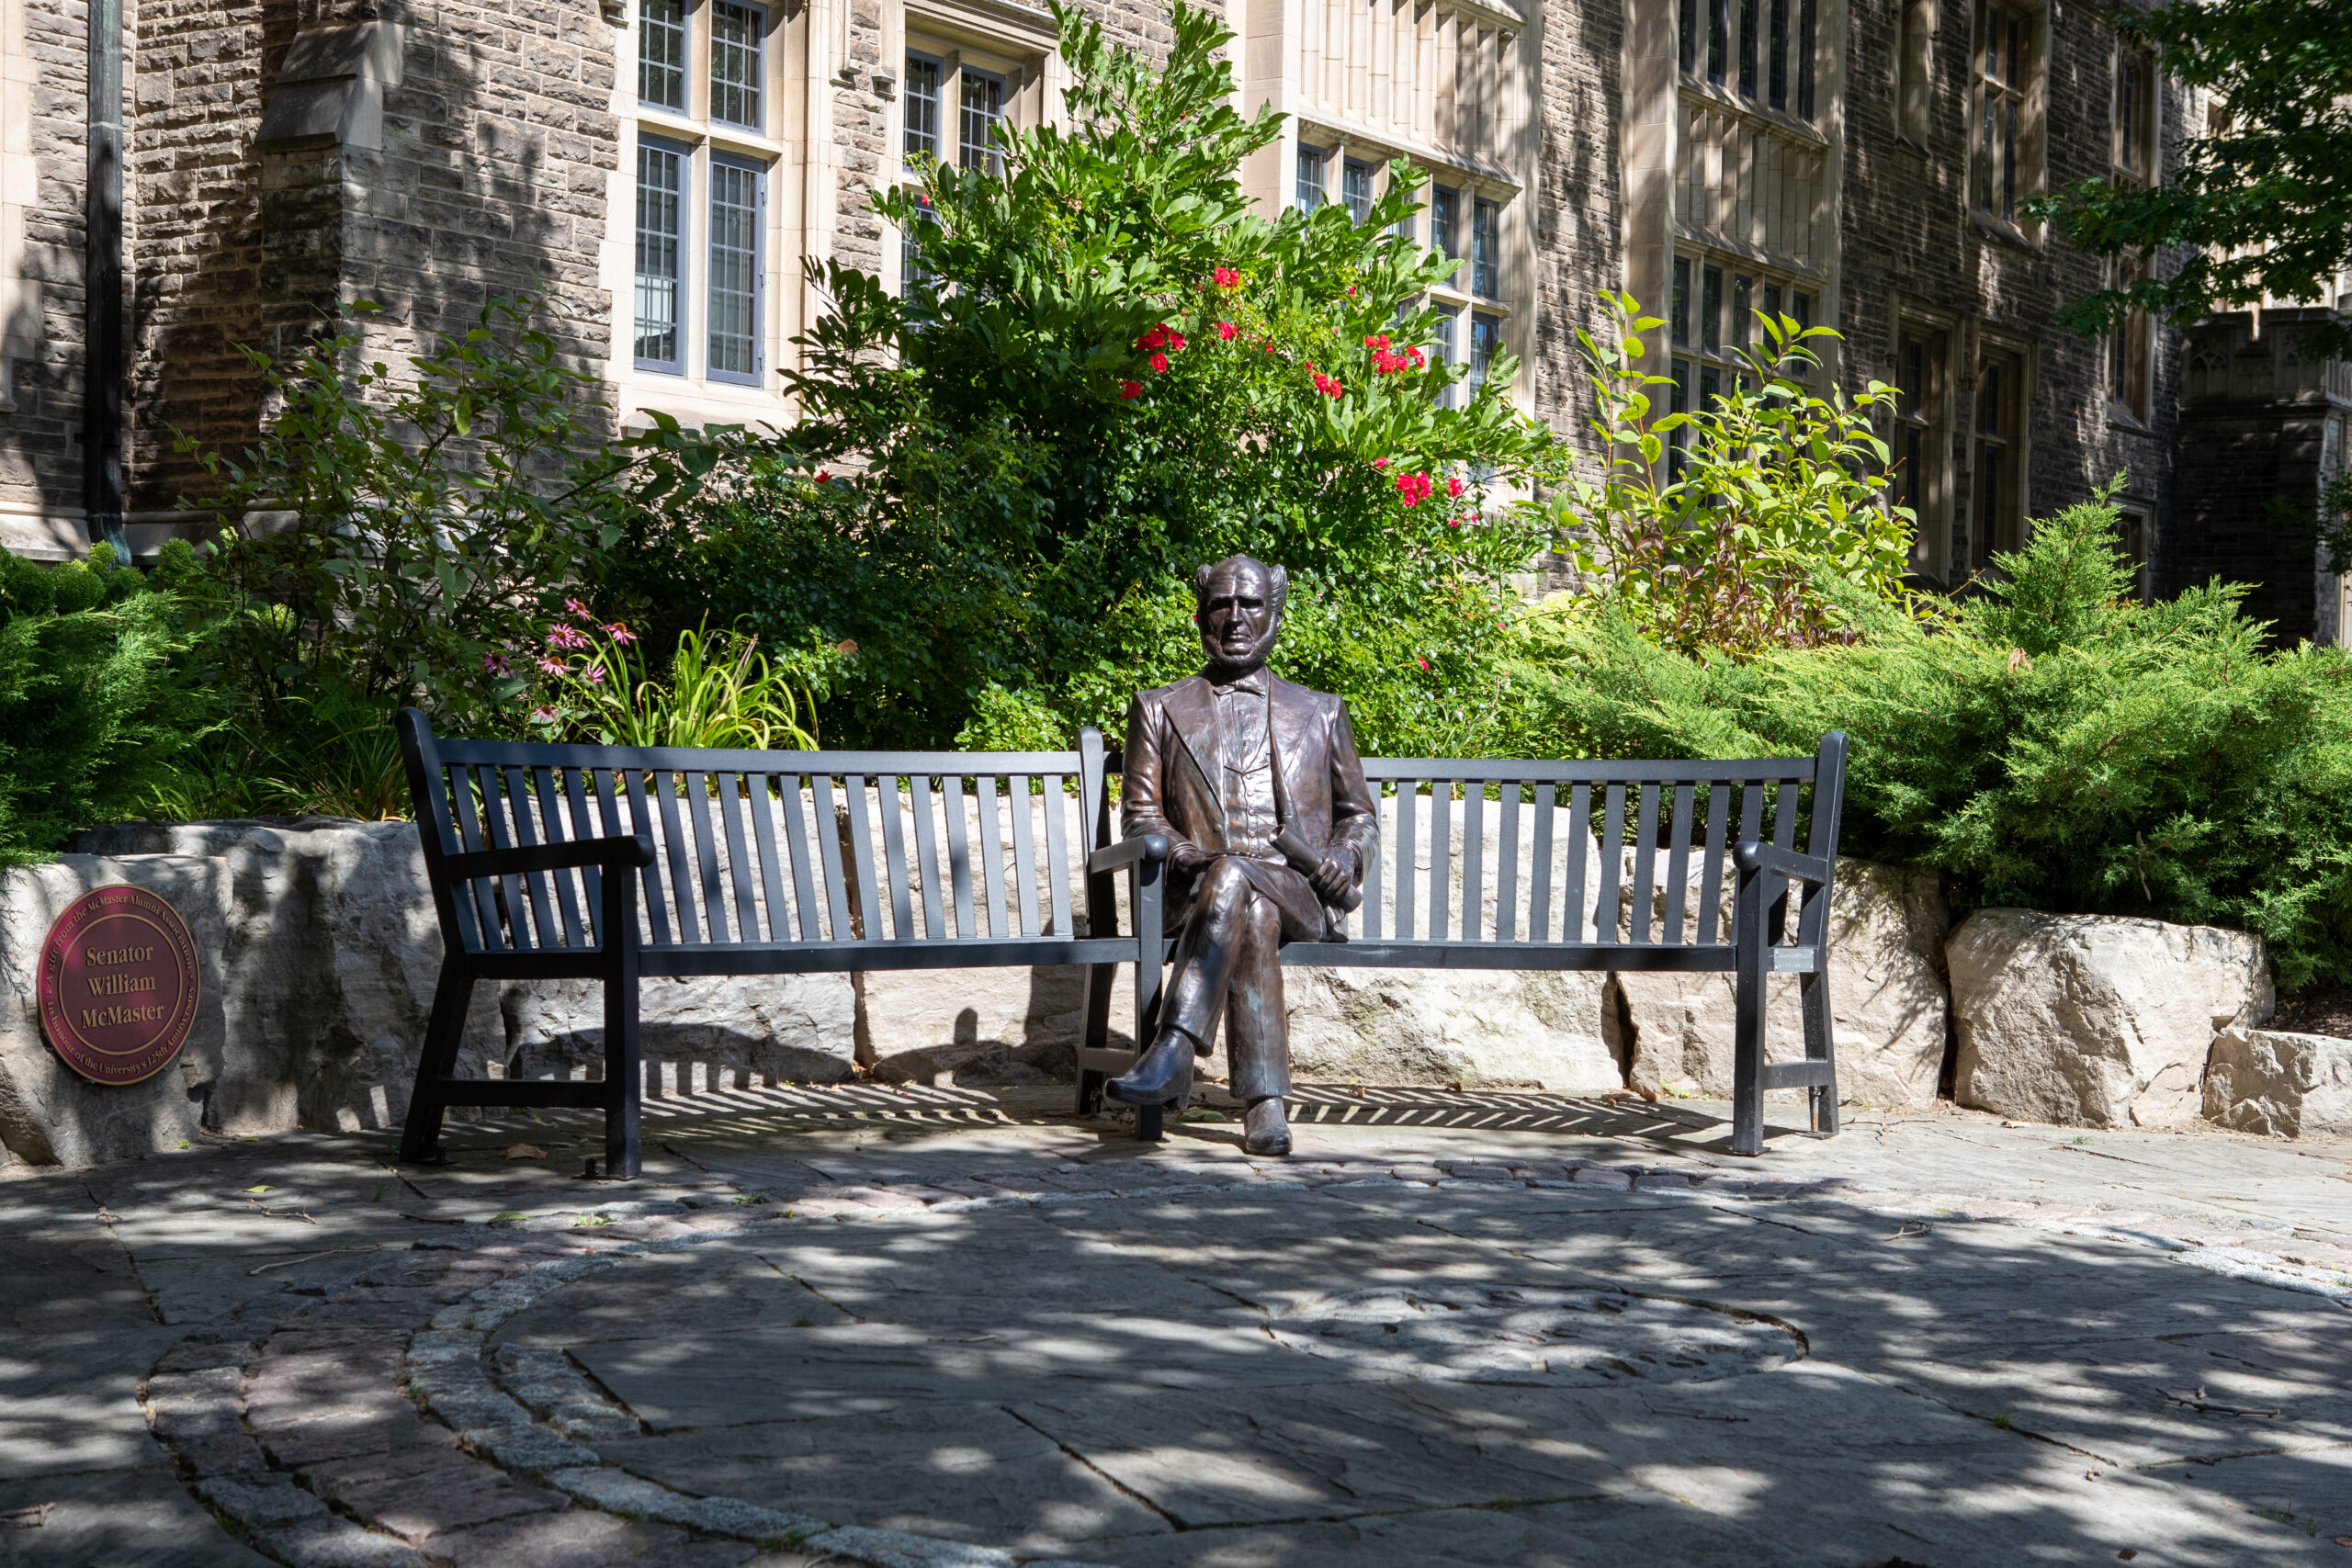 Senator McMaster statue on bench